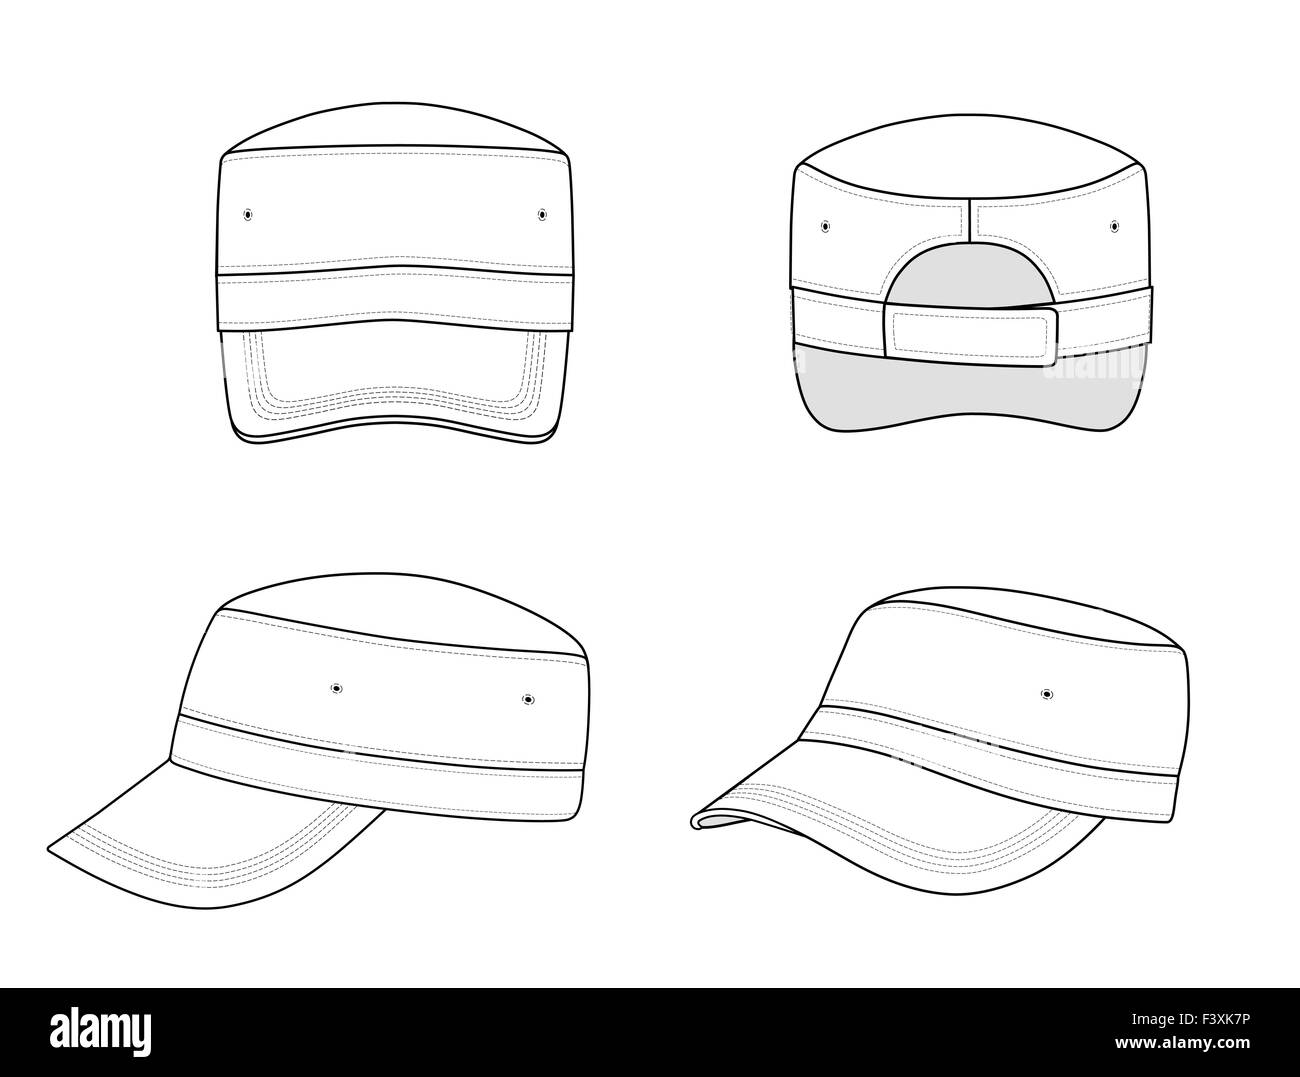 Outline military cap illustration Stock Photo - Alamy